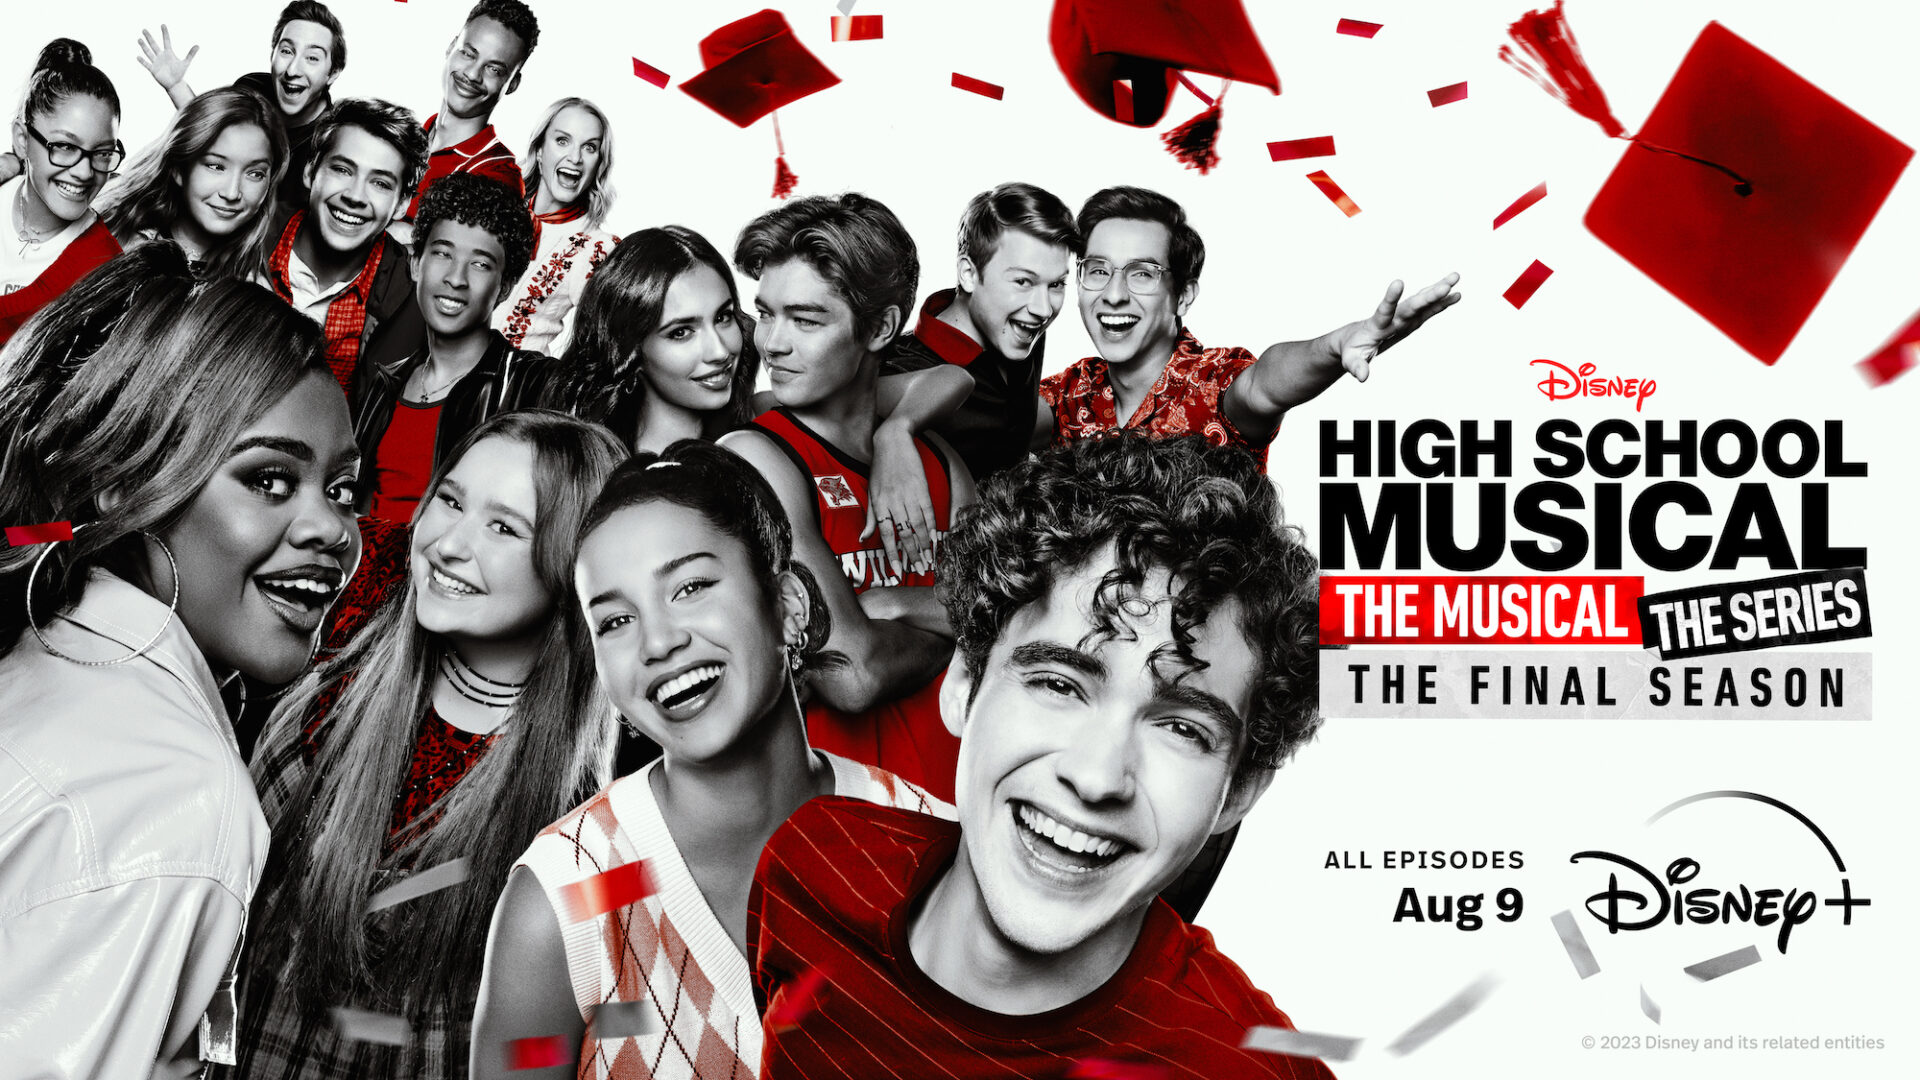 High School Musical: The Musical: The Series Goes Meta! Cast of High School Musical Joins Cast for Fourth and Final Season August 9th